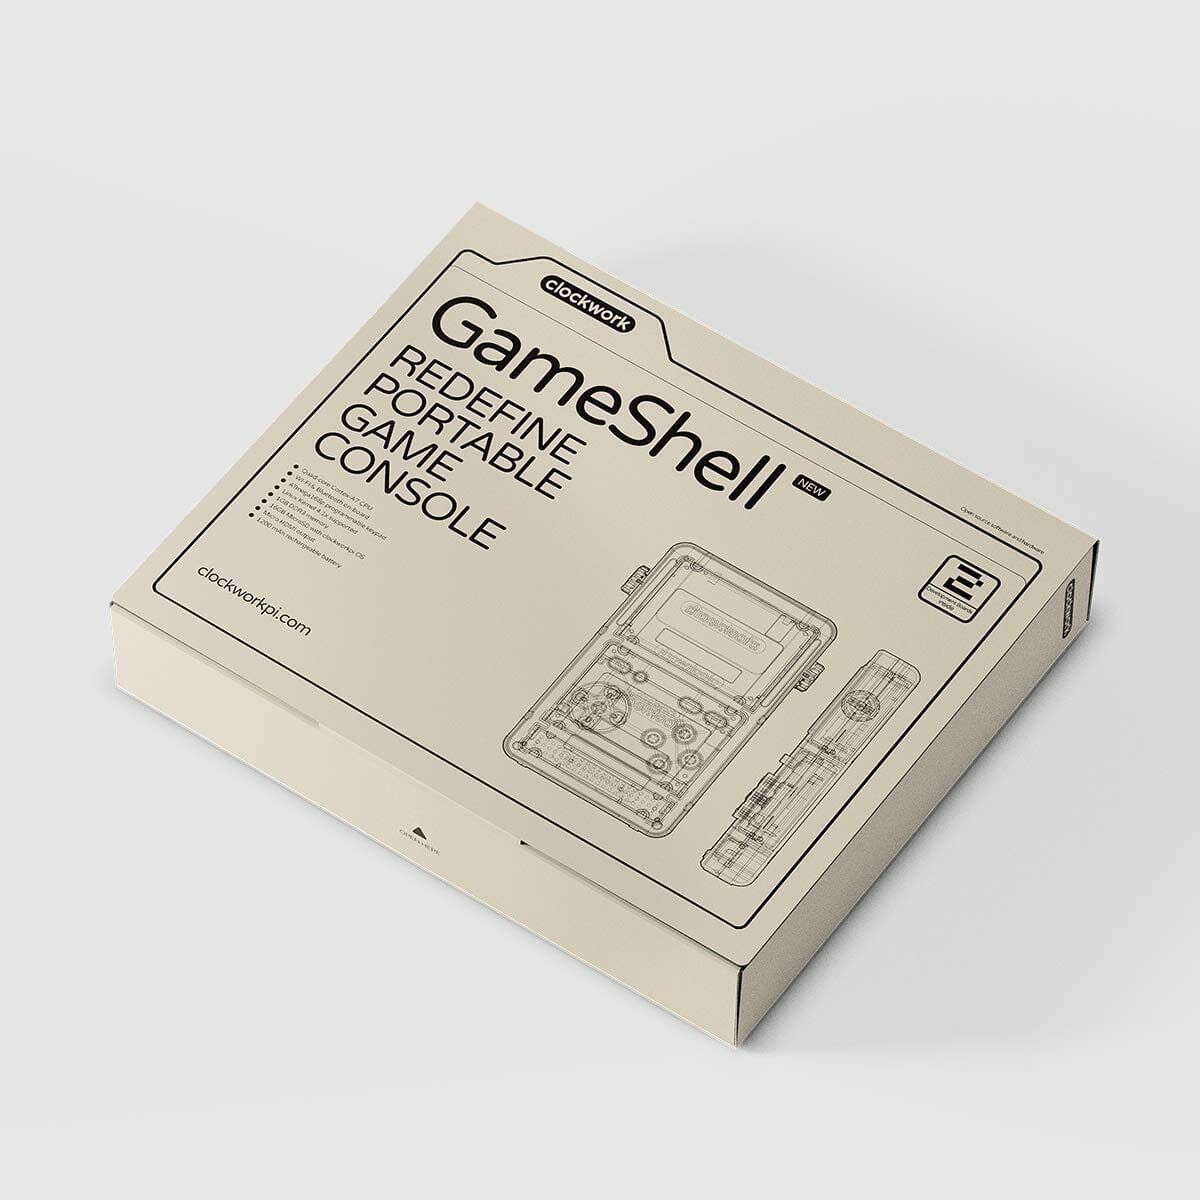 Gameshell เครื่องเกม Retro ยุคใหม่ ออกแบบเป็นโมดูล ถอดเปลี่ยนชิ้นส่วนได้ ต่อขึ้นจอใหญ่ได้ 15